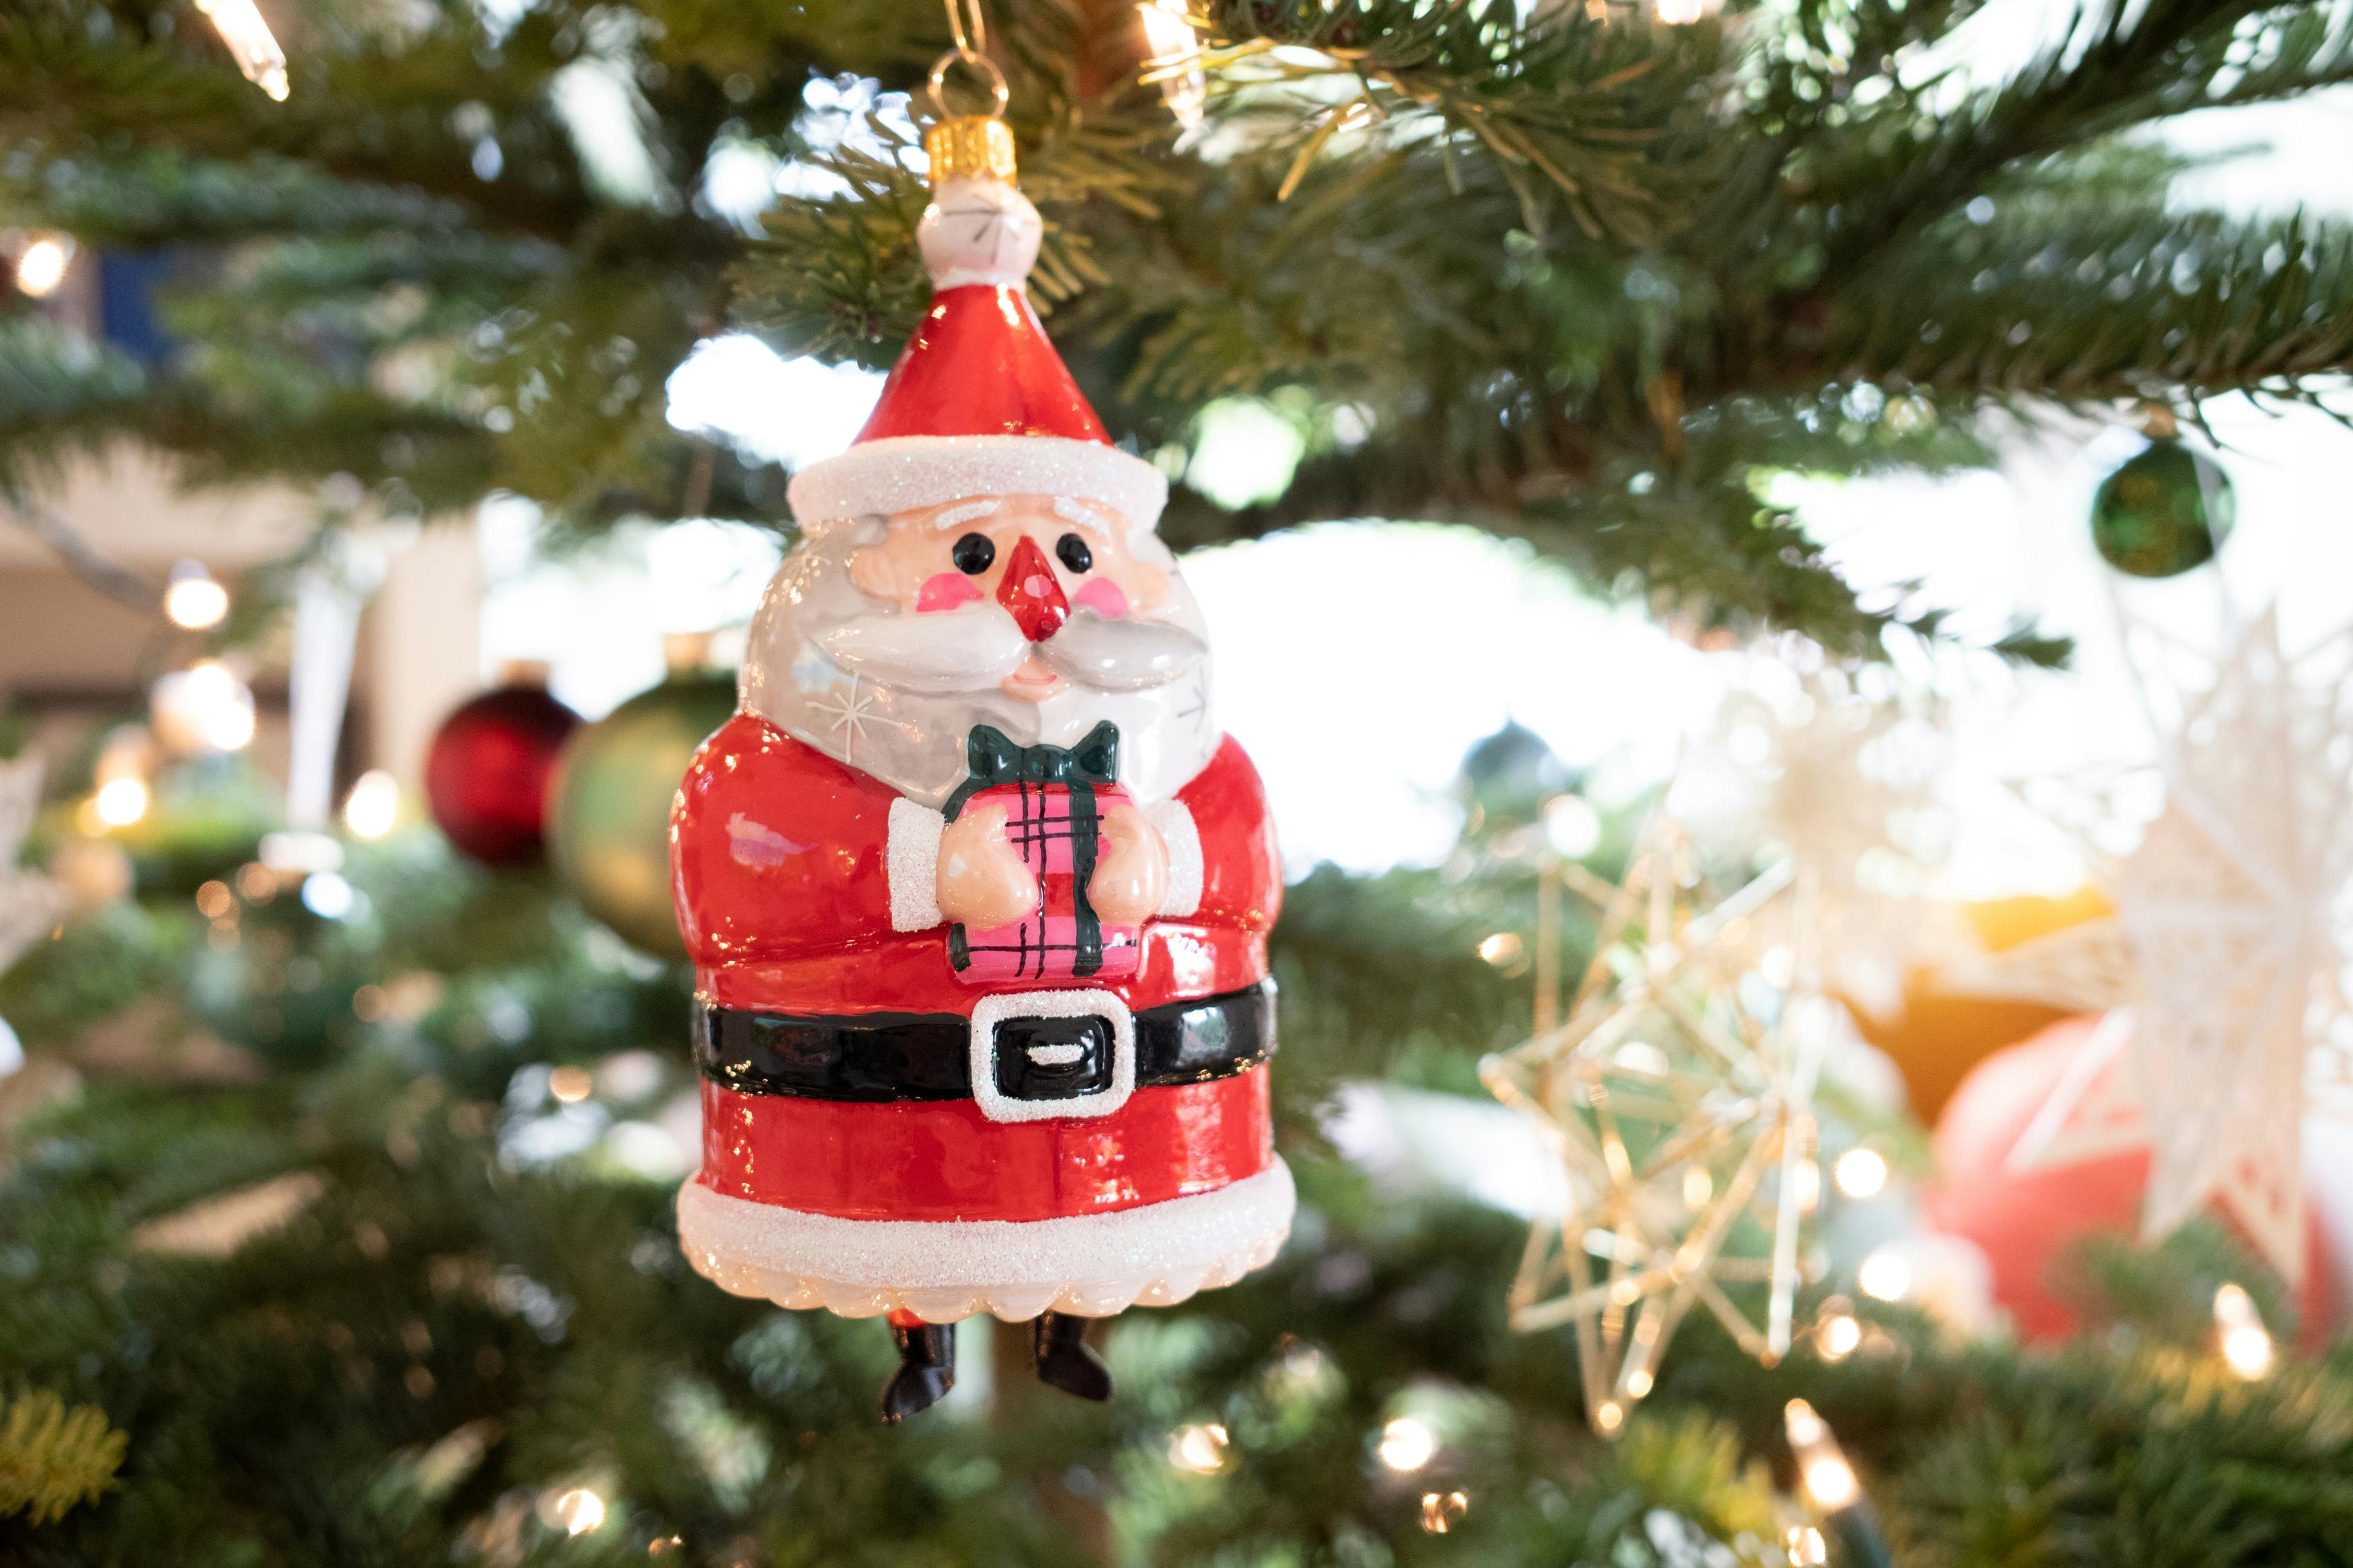 Santa.com Releases First Annual Christmas Ornament